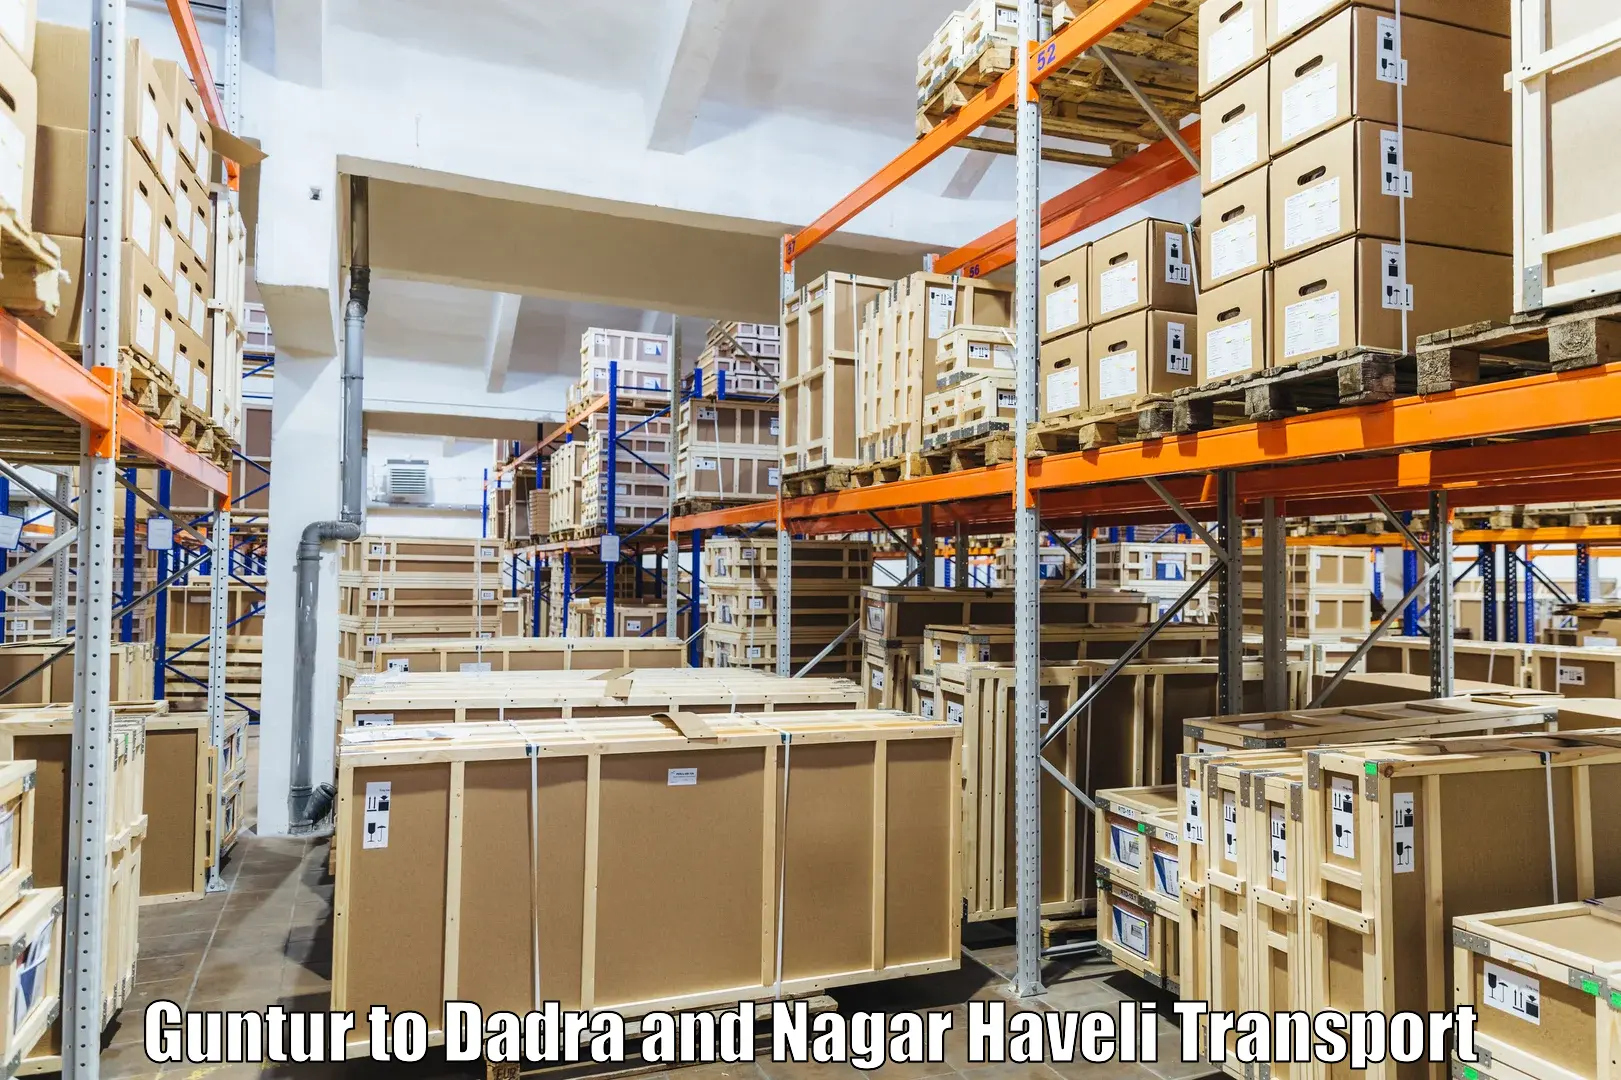 Container transport service Guntur to Dadra and Nagar Haveli